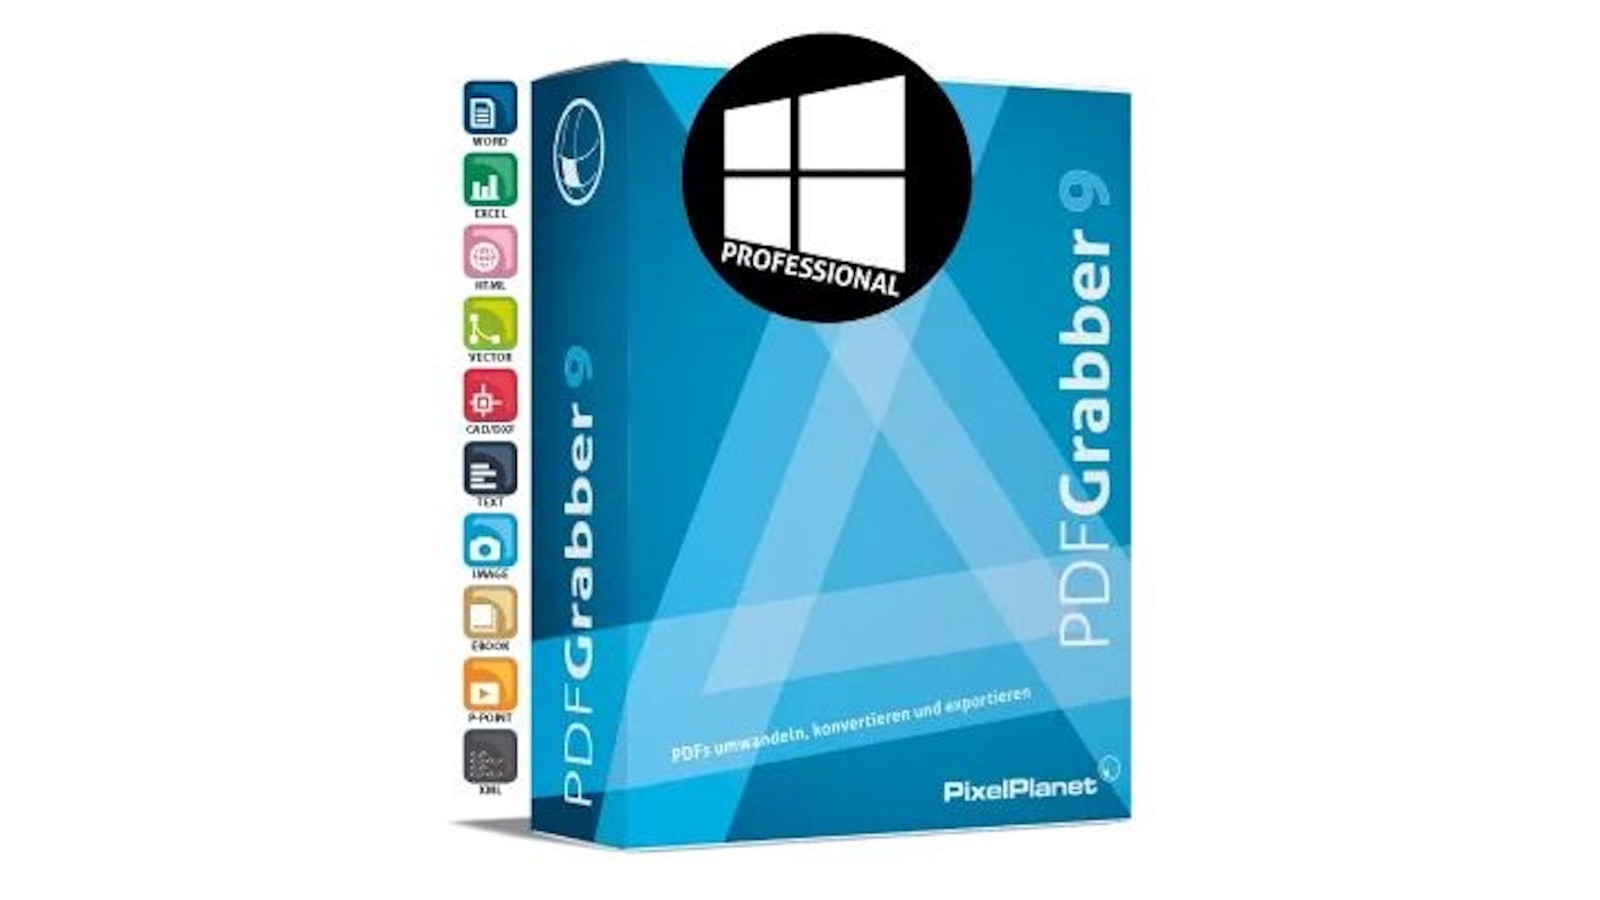 PixelPlanet PdfGrabber 9 Professional Network Licence Key (Lifetime / 5 Users) [USD 7.74]